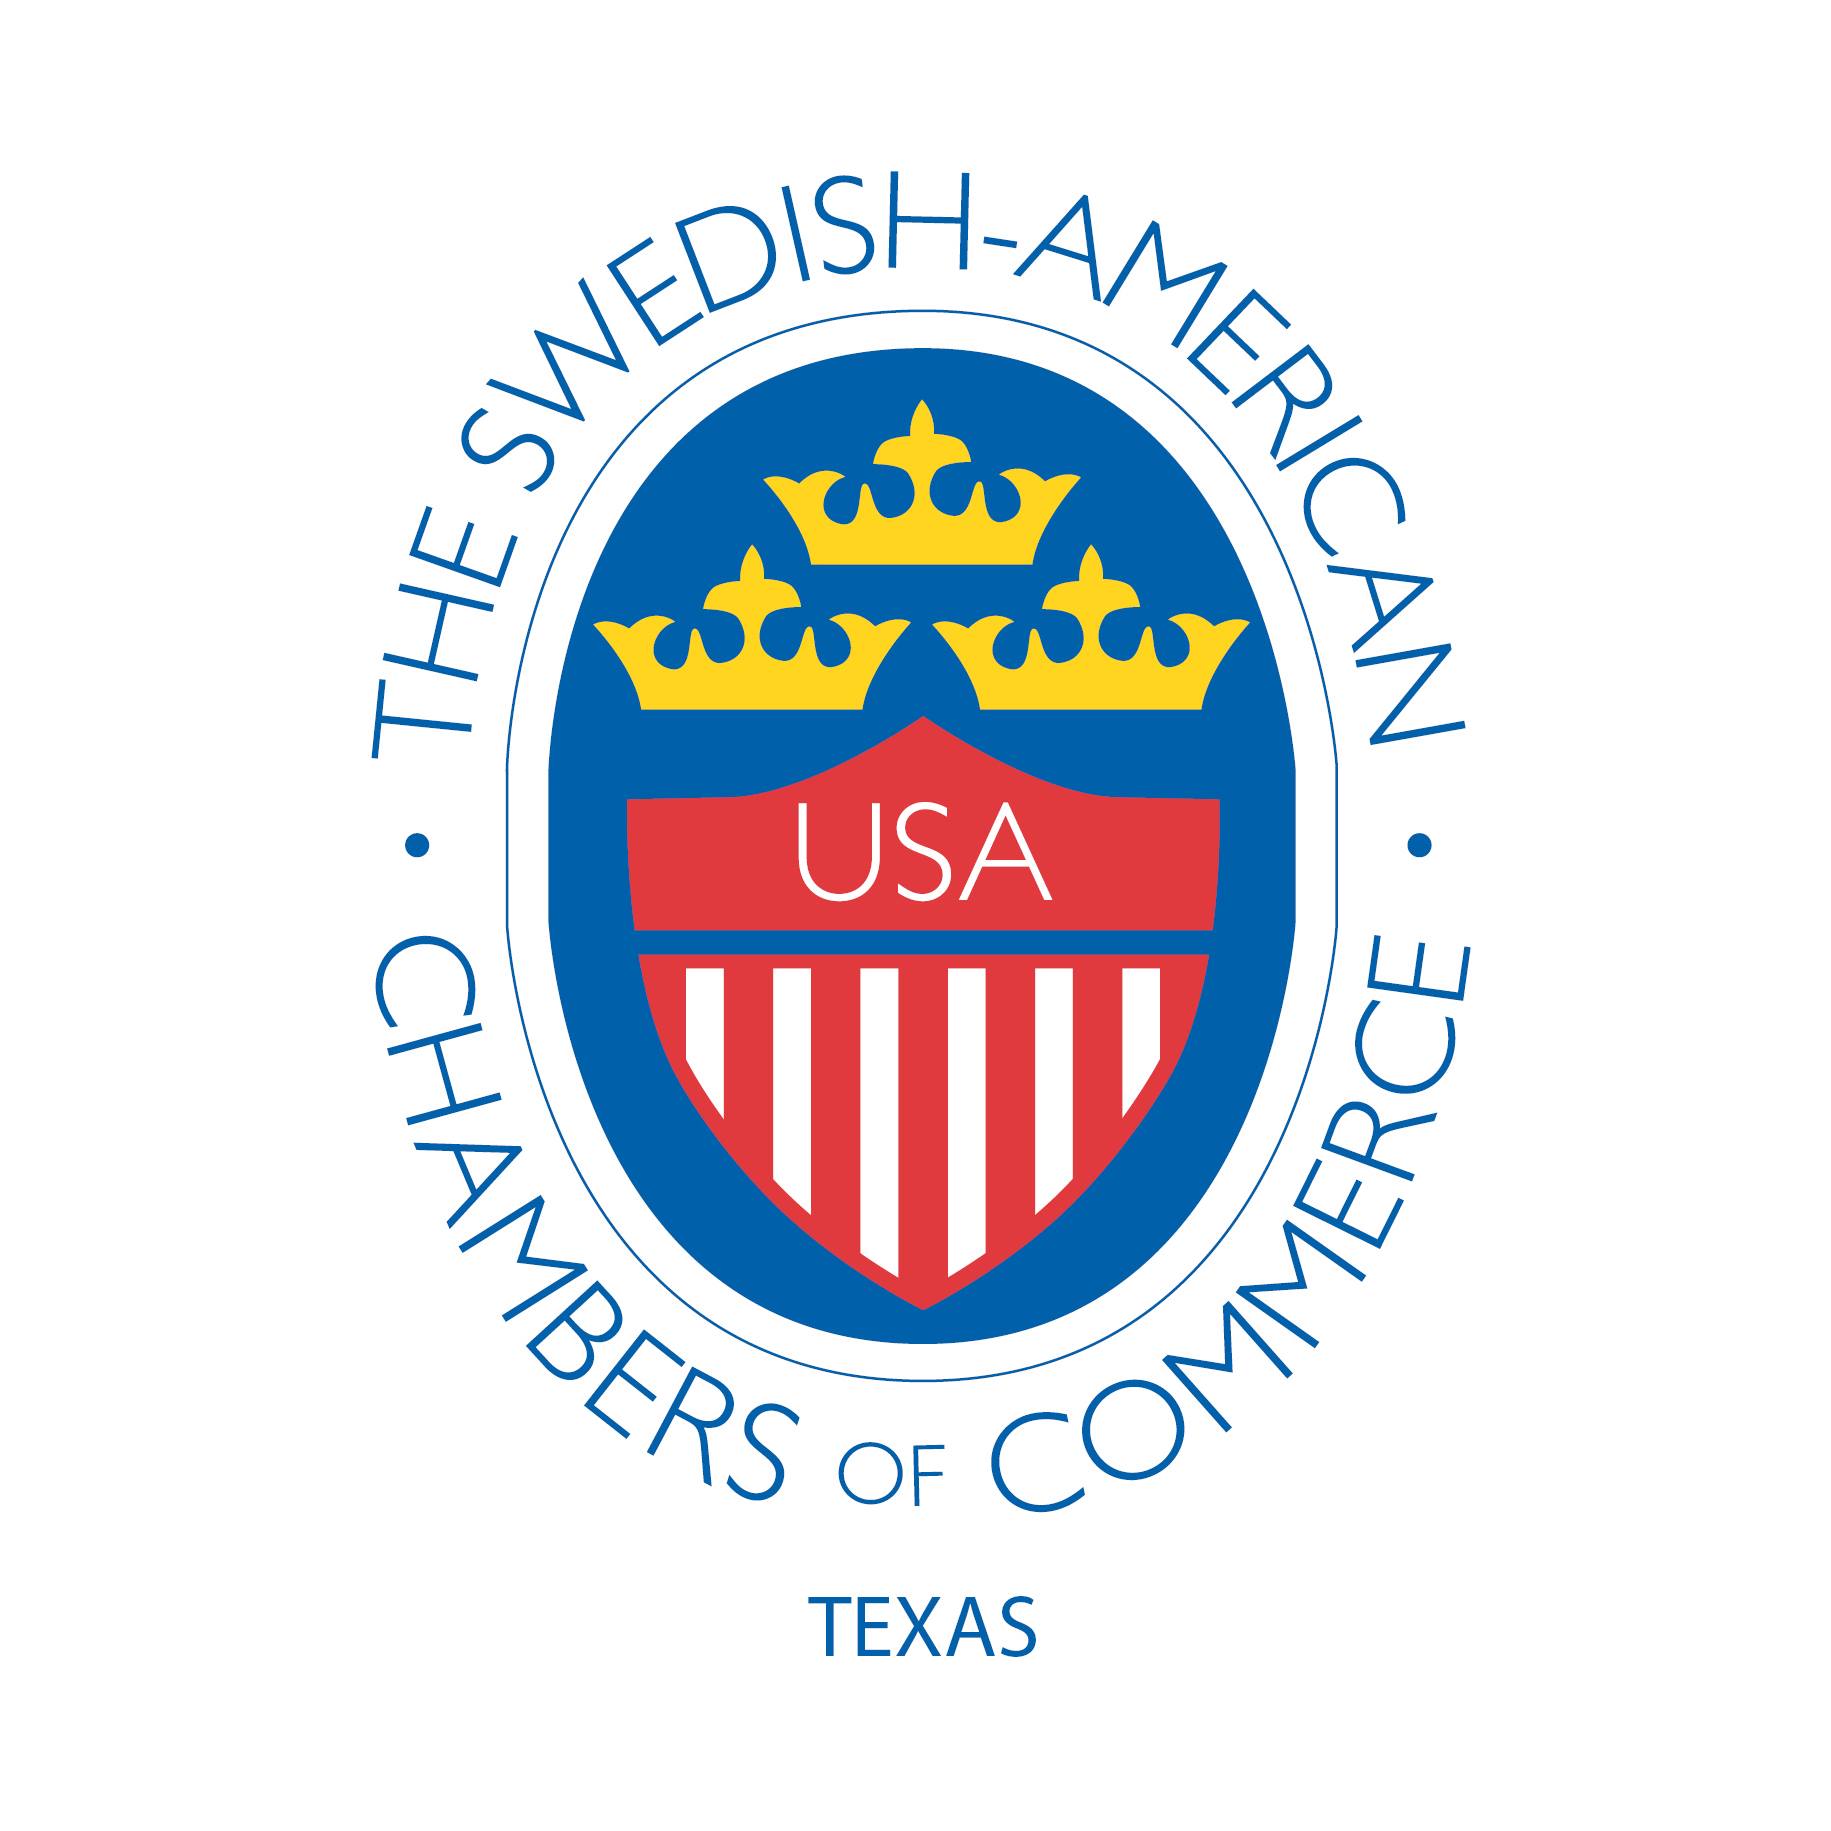 Swedish-American Chamber of Commerce Texas